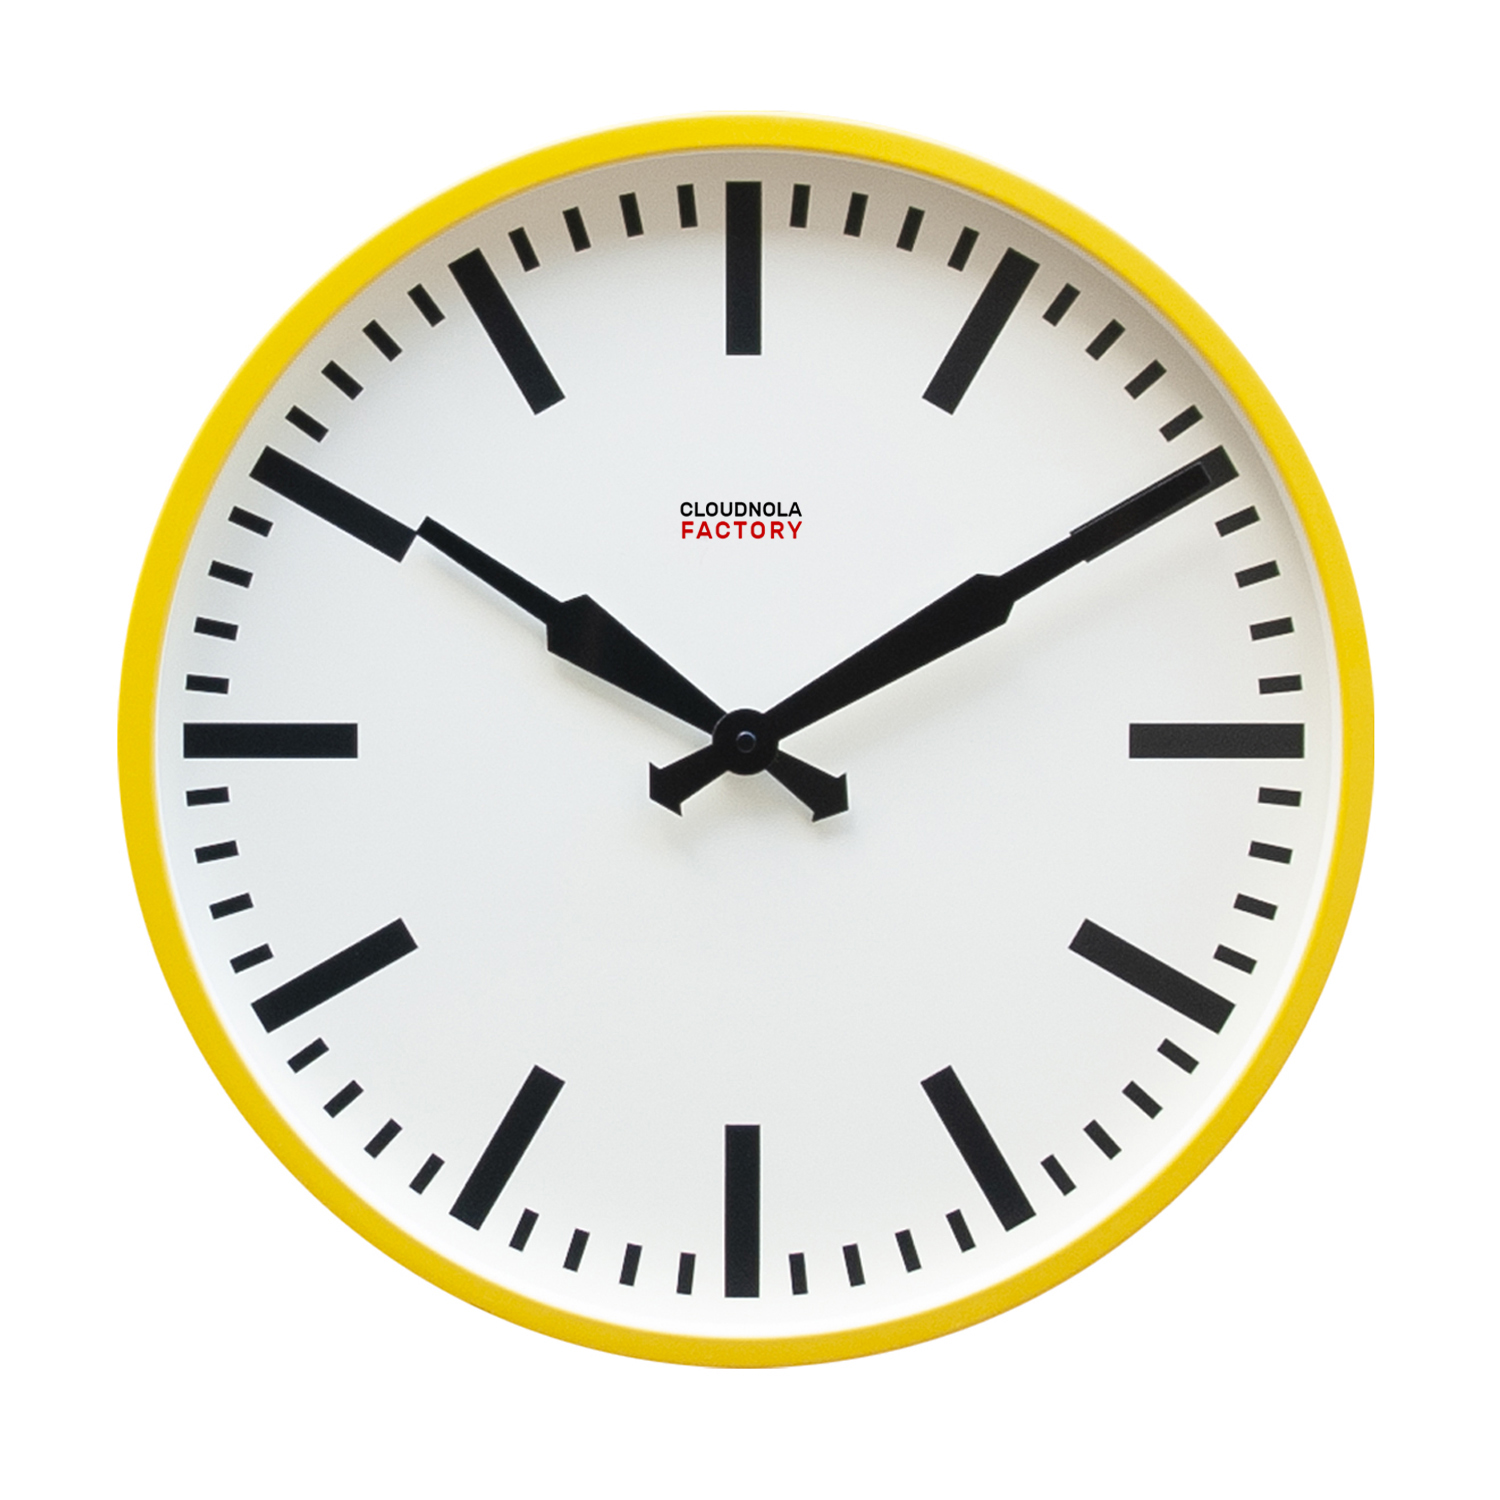 Cloudnola Factory Railway clock 45cm Yellow Stripe